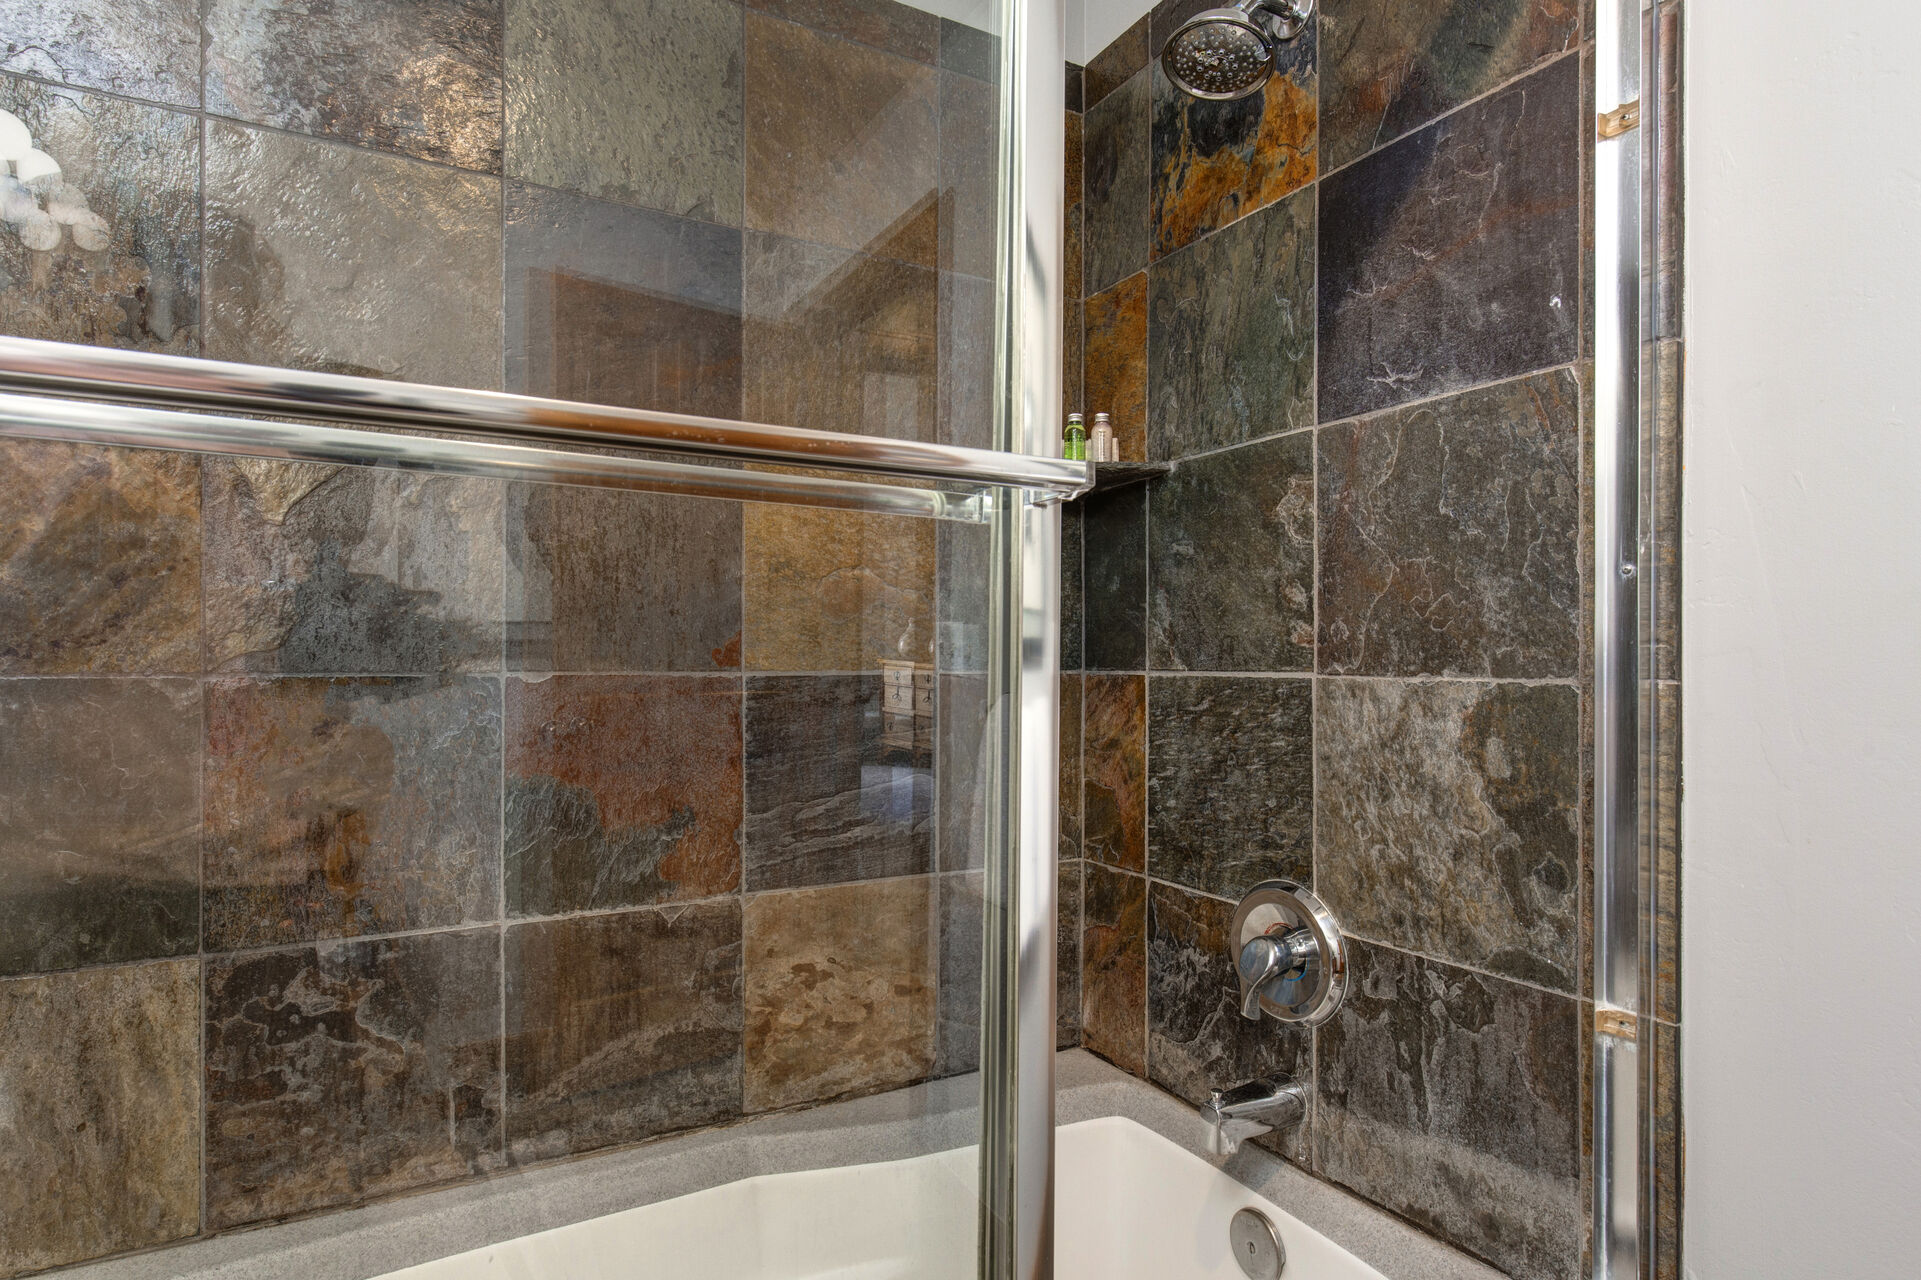 Upper Level Shared Full Bathroom with tub/shower combo